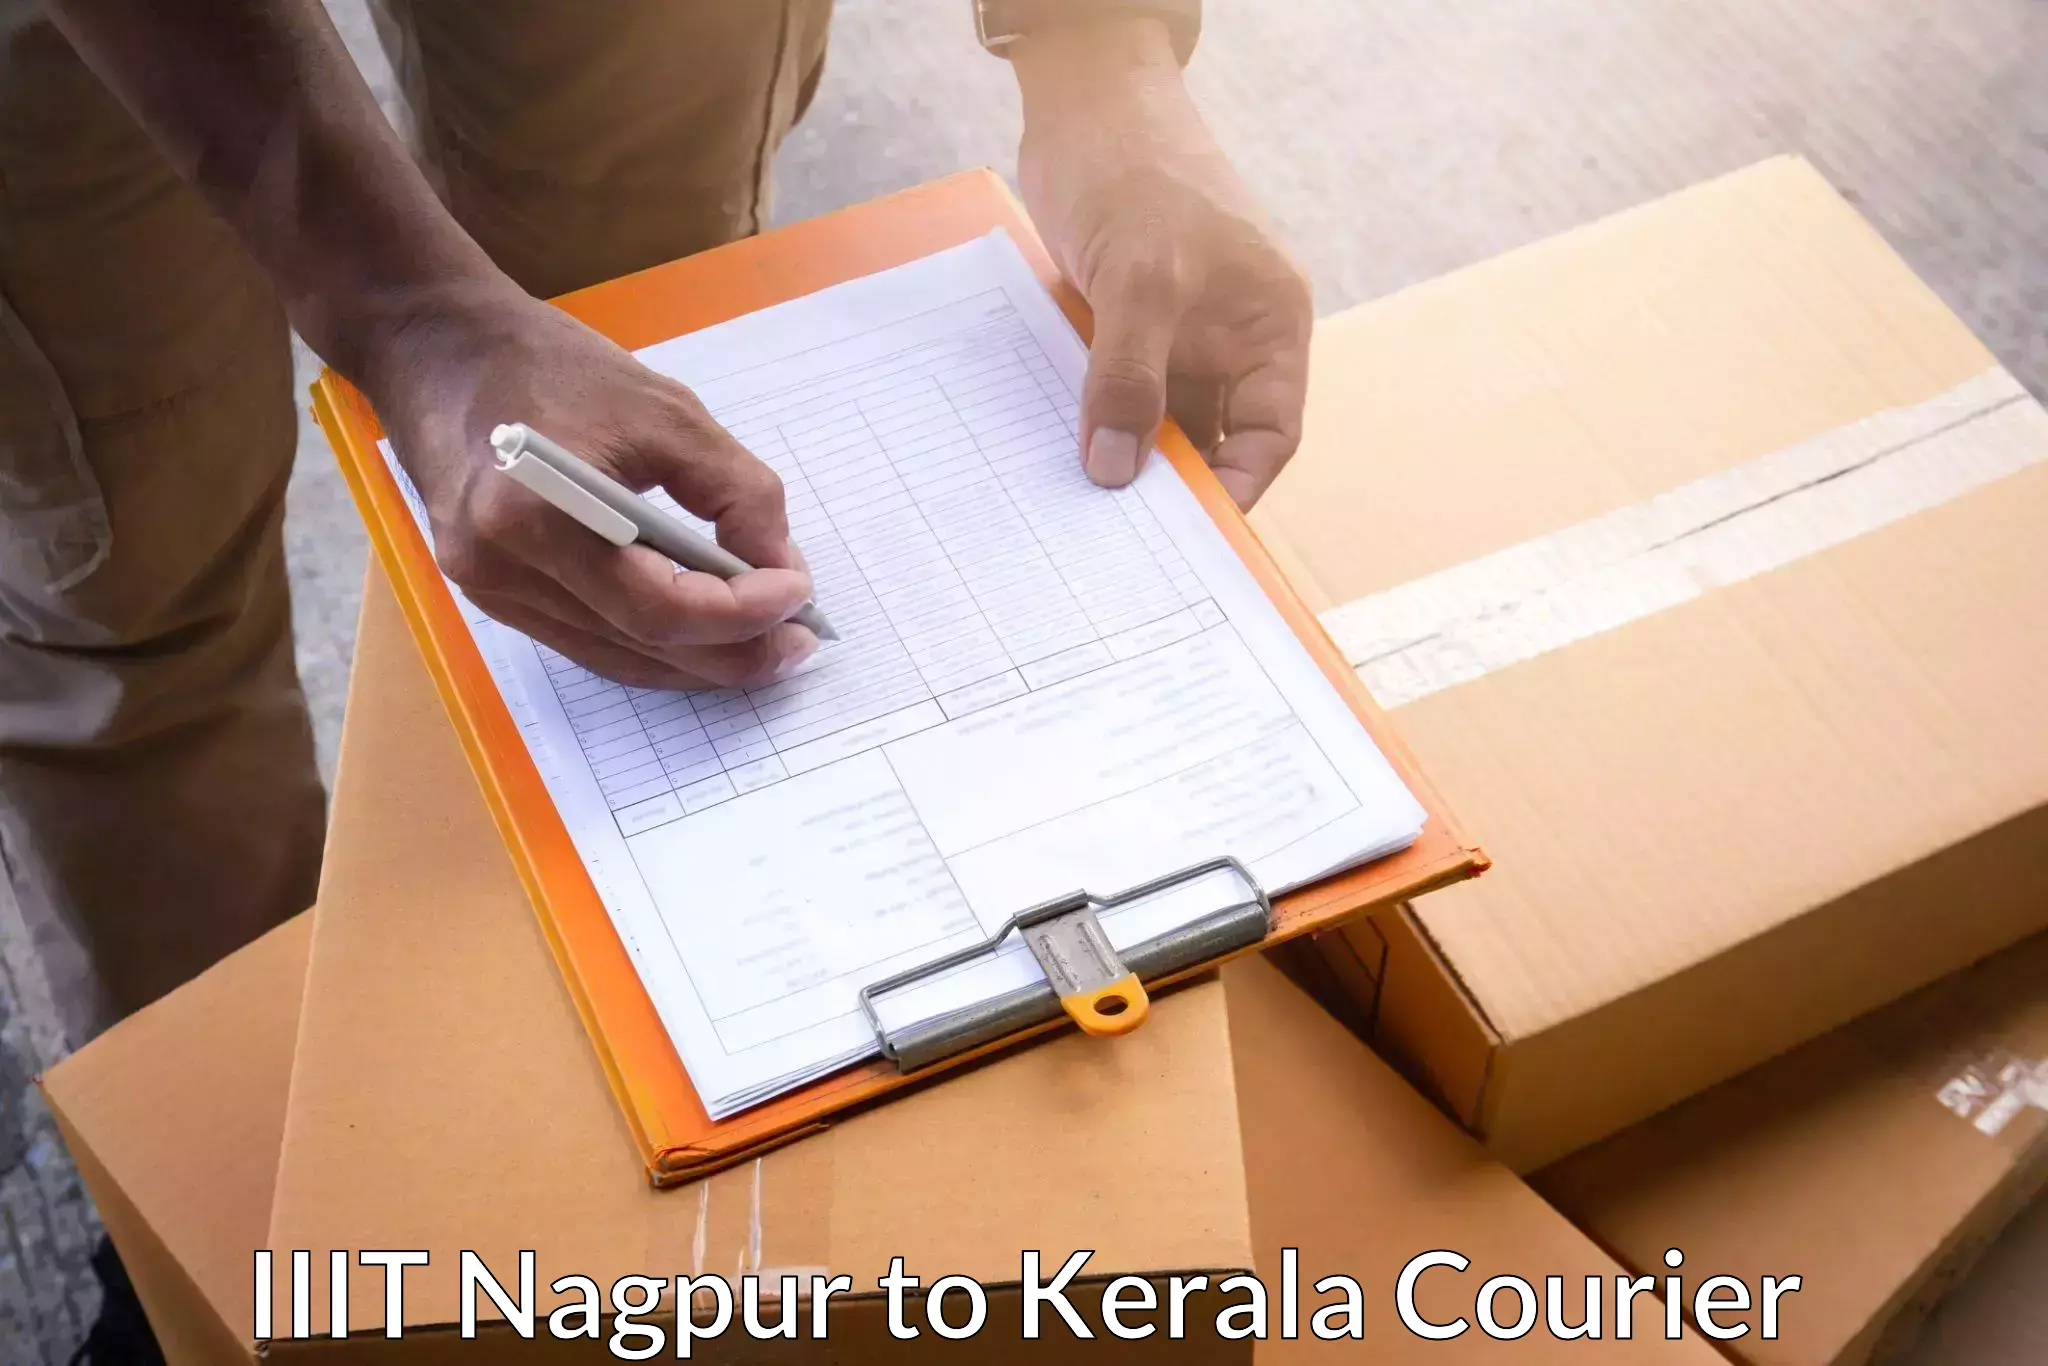 Express courier capabilities IIIT Nagpur to Trivandrum